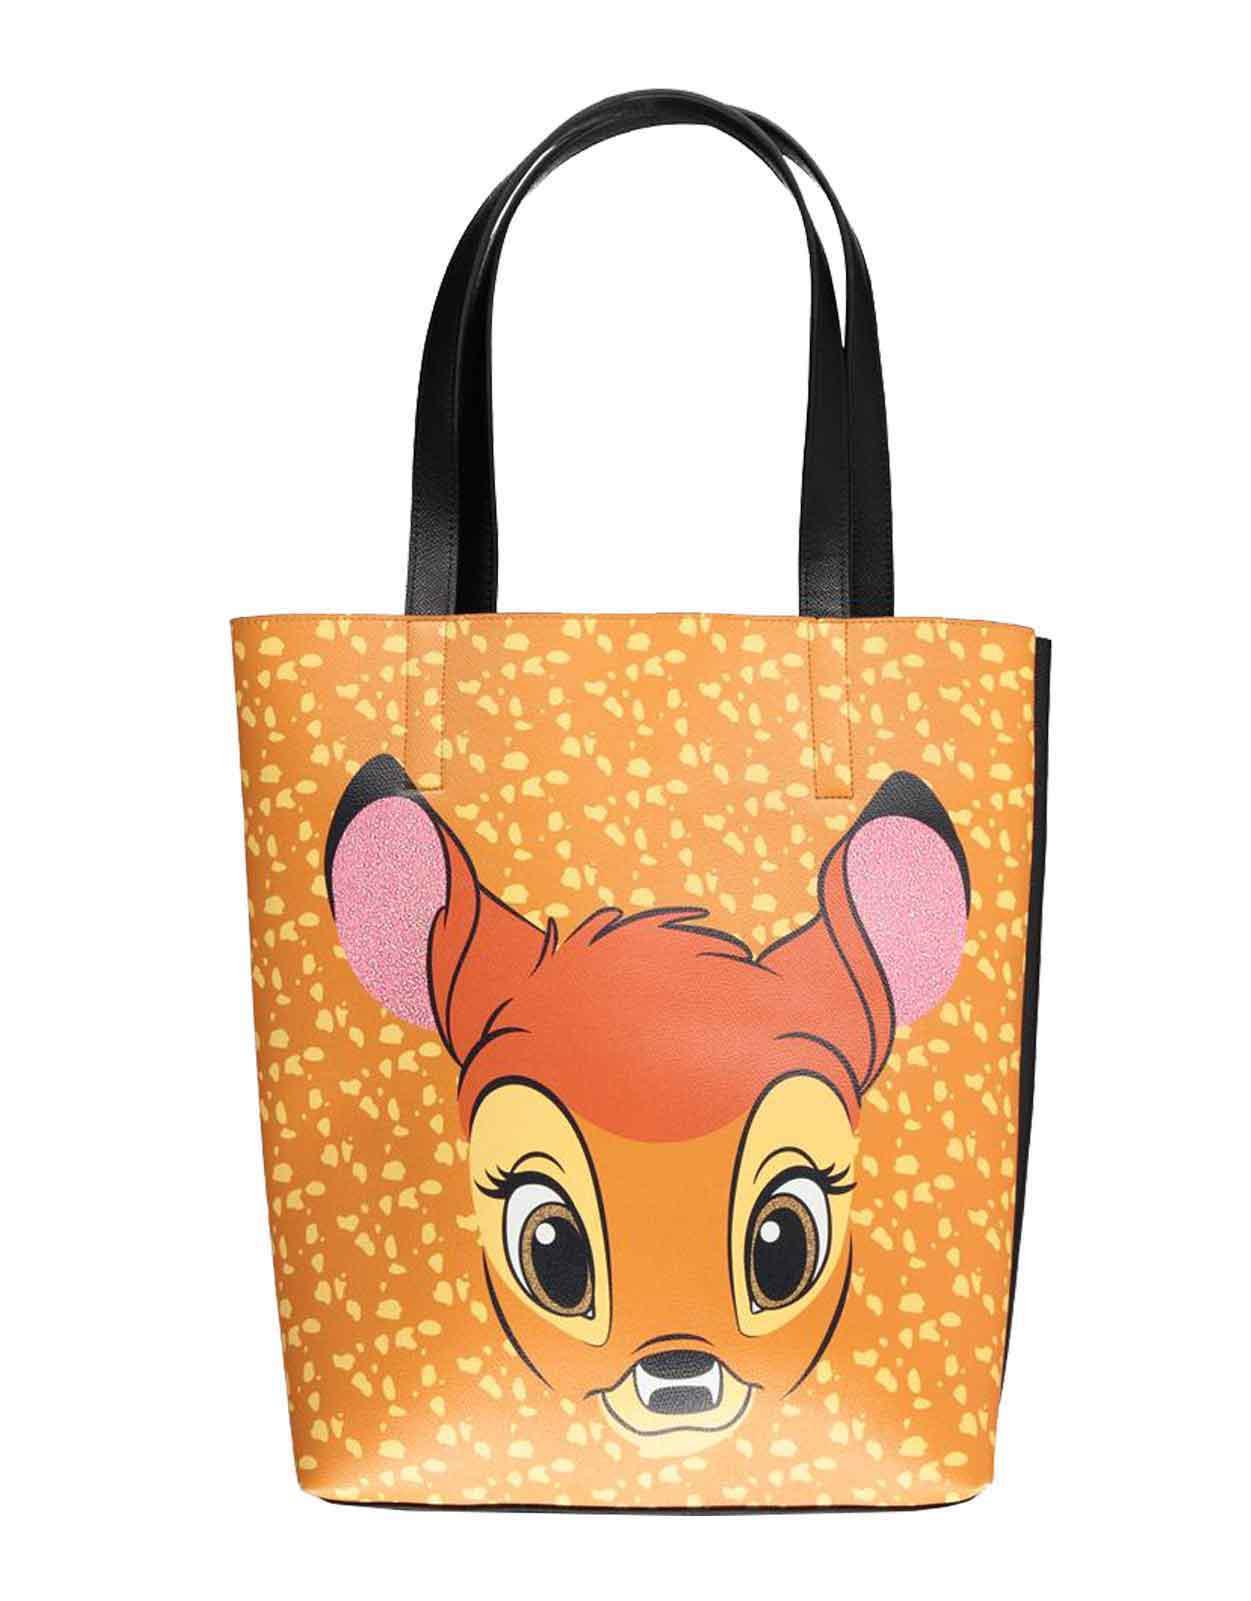 Bambi Shopper Bag Tote portrait Print new Official Disney Brown One Size